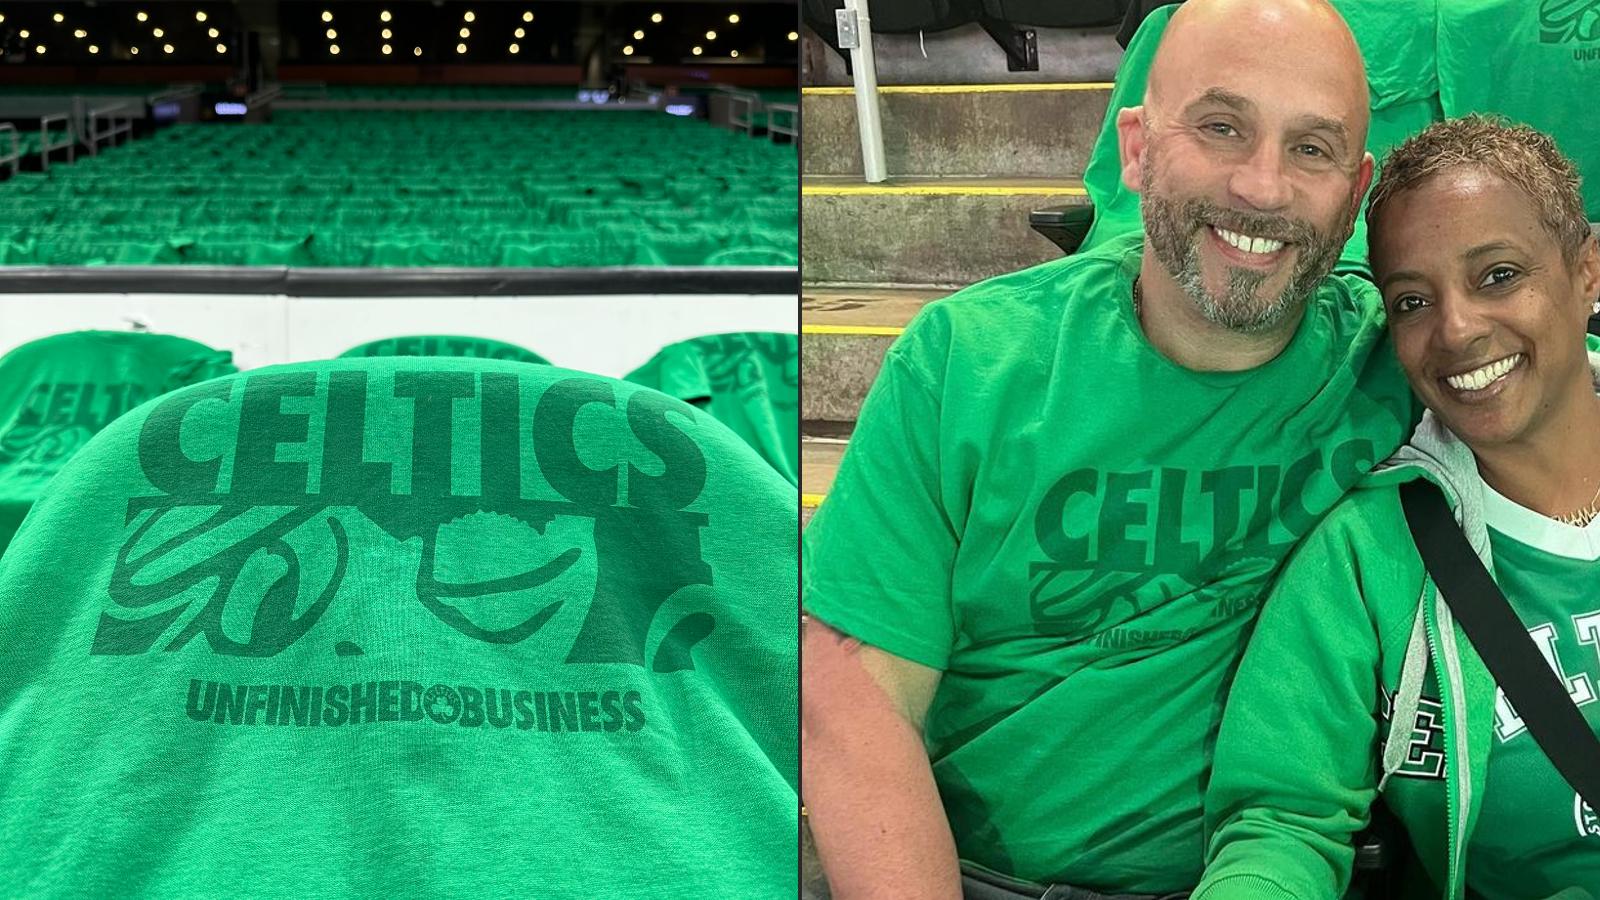 Nike Boston Celtics Unfinished Business 2023 shirt, hoodie, longsleeve,  sweatshirt, v-neck tee